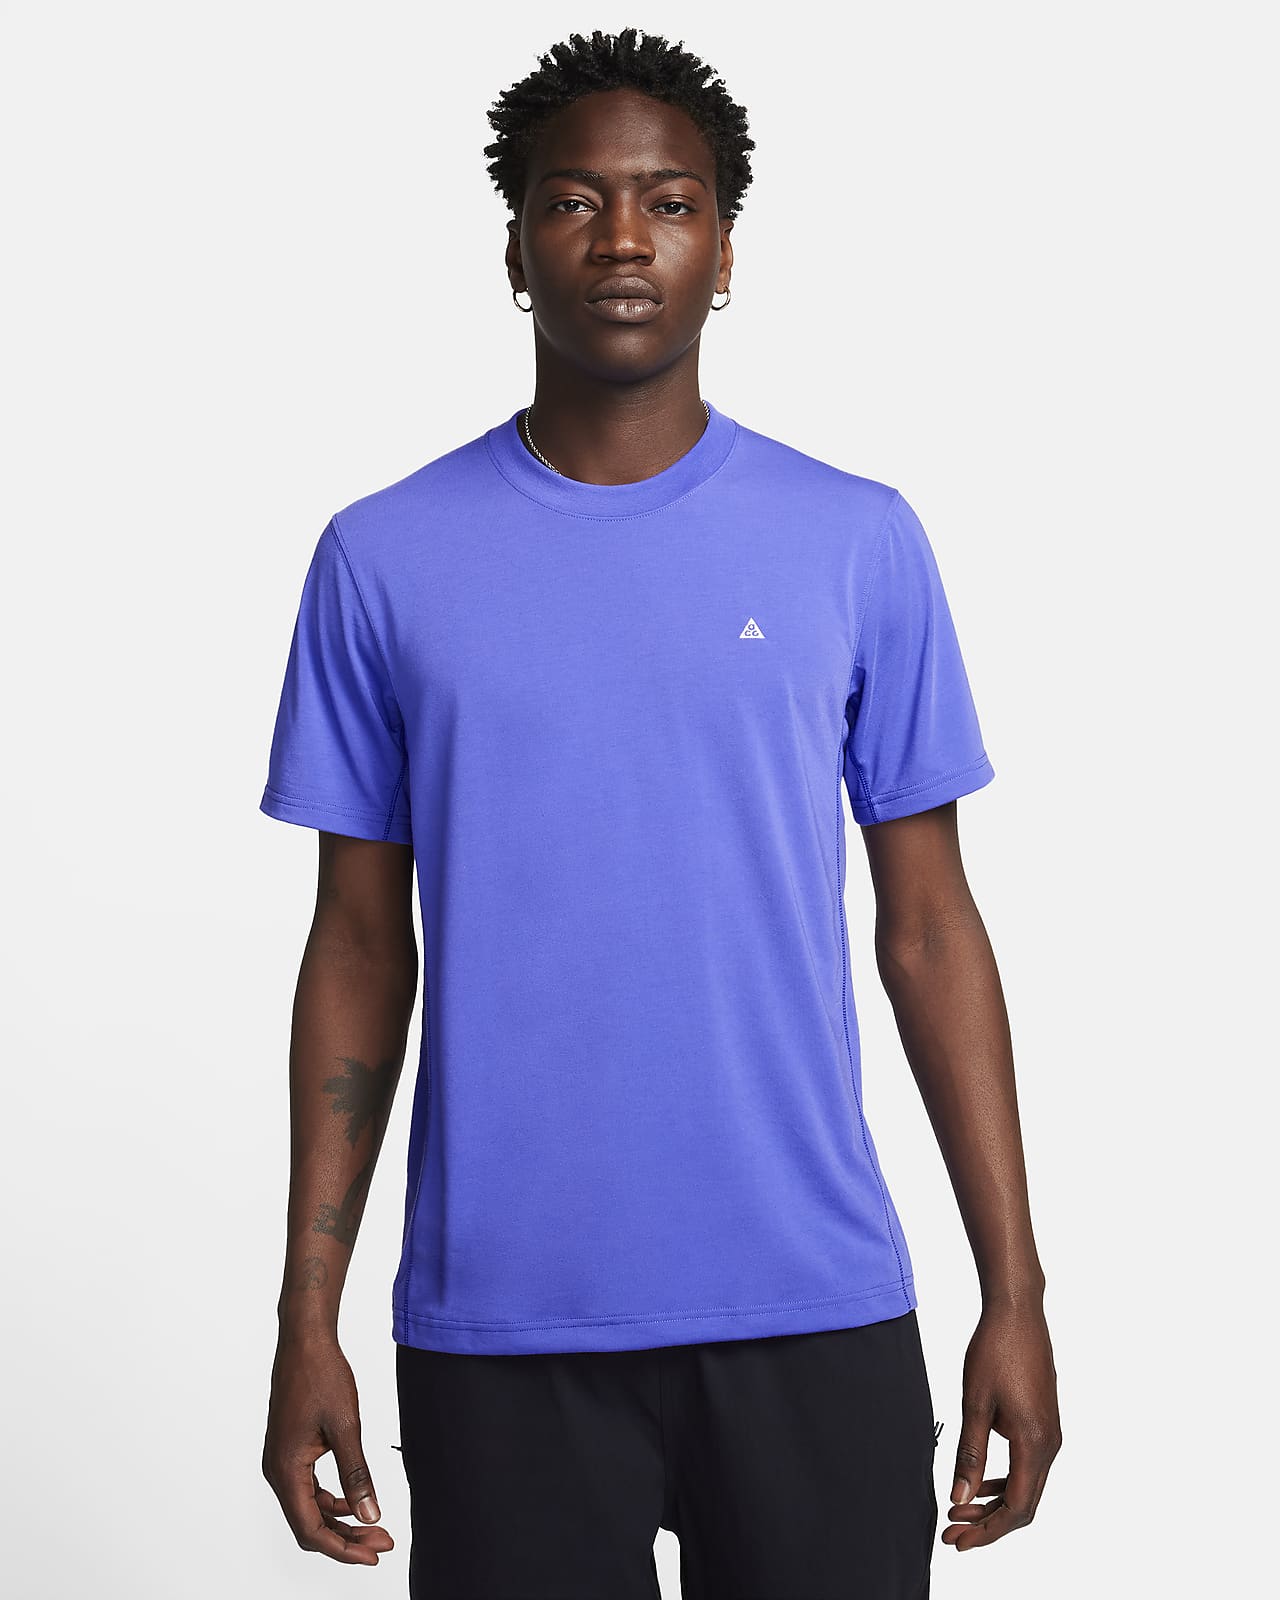 Nike ACG "Goat Rocks" Men's Dri-FIT ADV UV Short-Sleeve Top